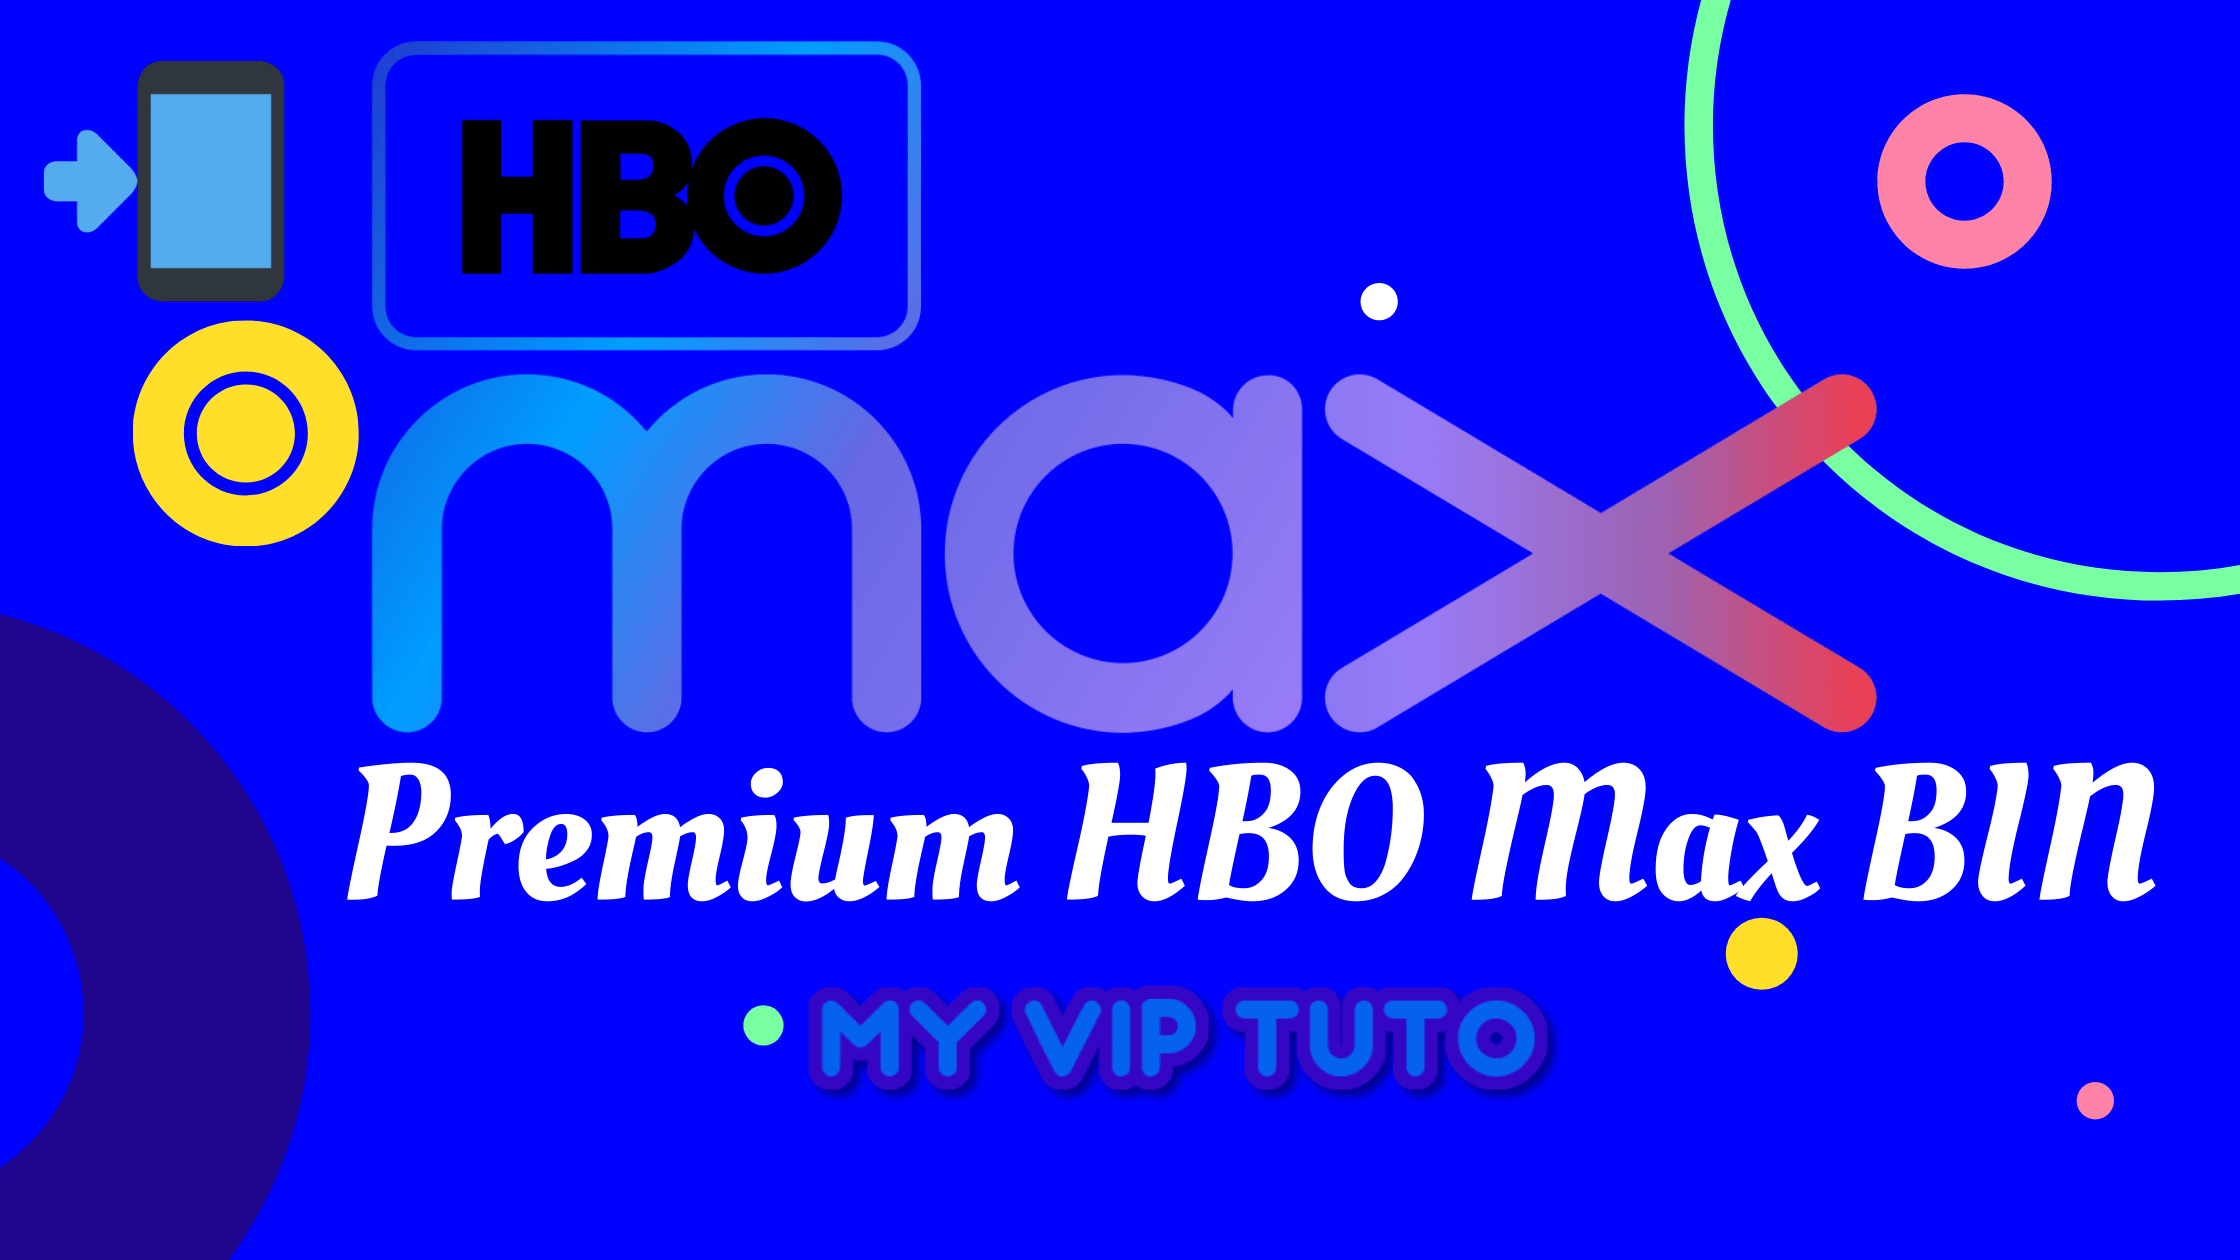 Premium HBO MAX BIN July 2020